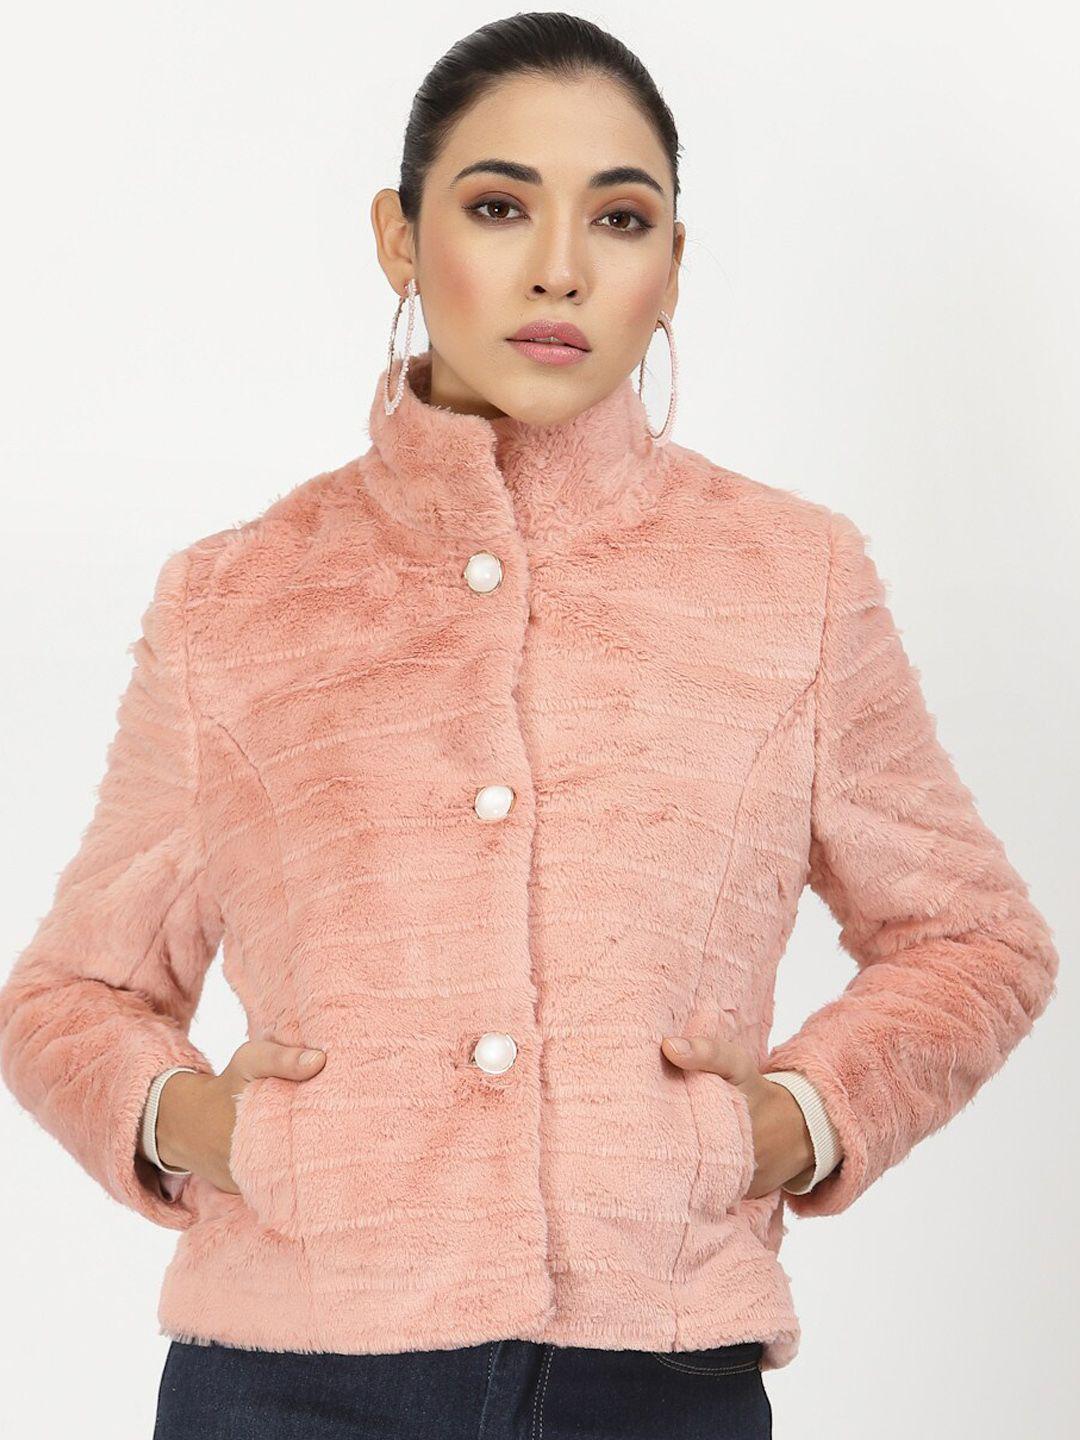 juelle women peach-coloured tailored jacket